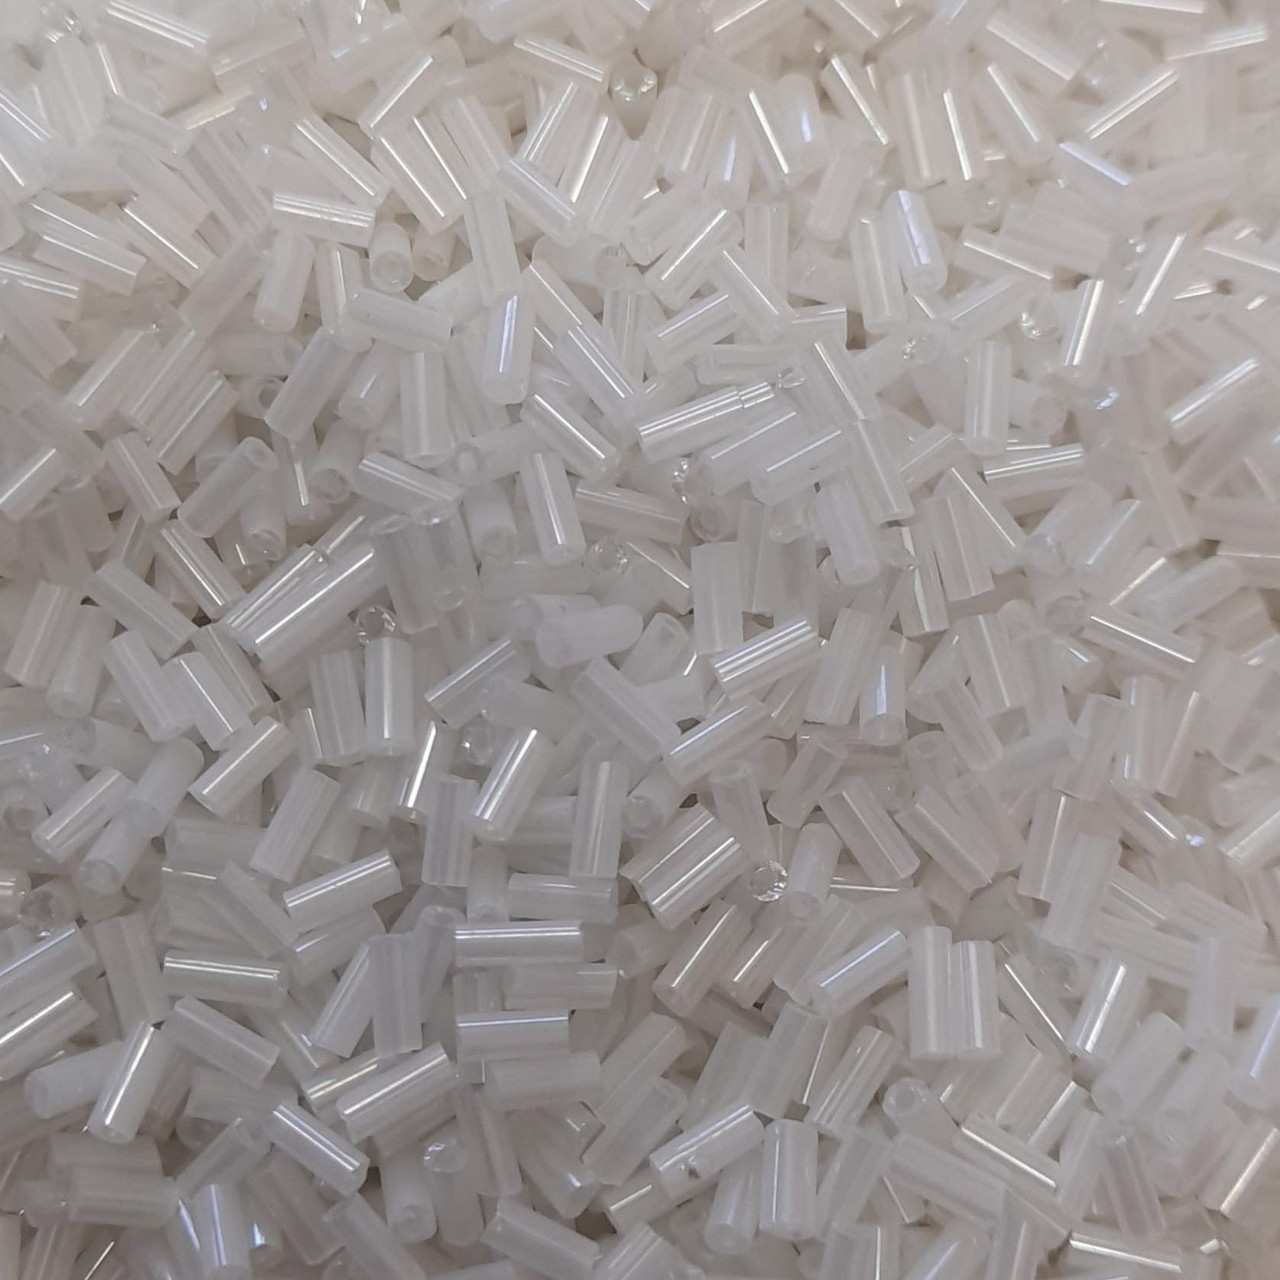 50g glass bugle beads - White Ceylon - approx 4mm